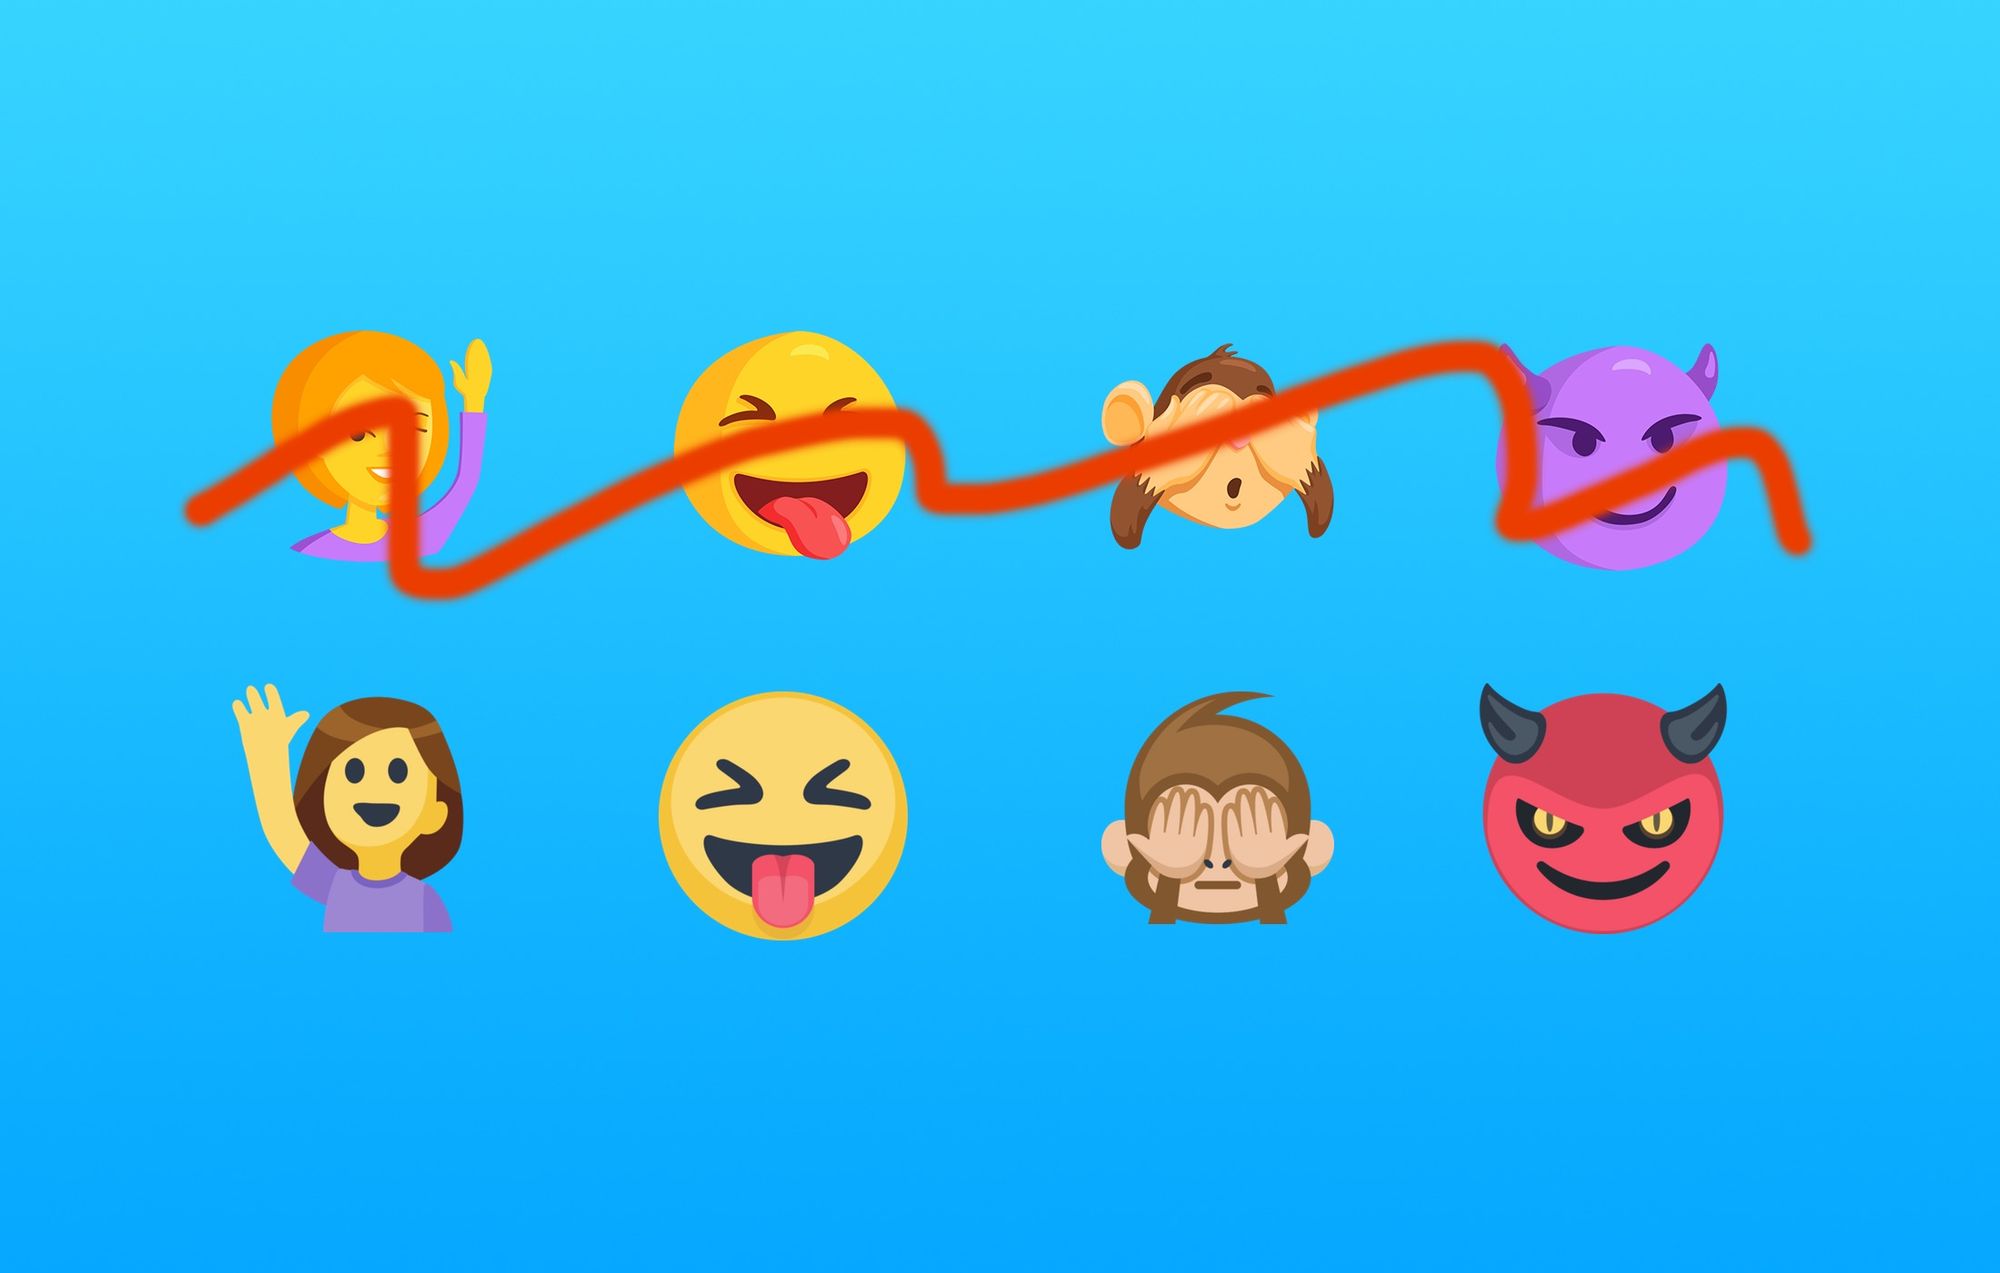 Facebook Discontinues Messenger Emojis